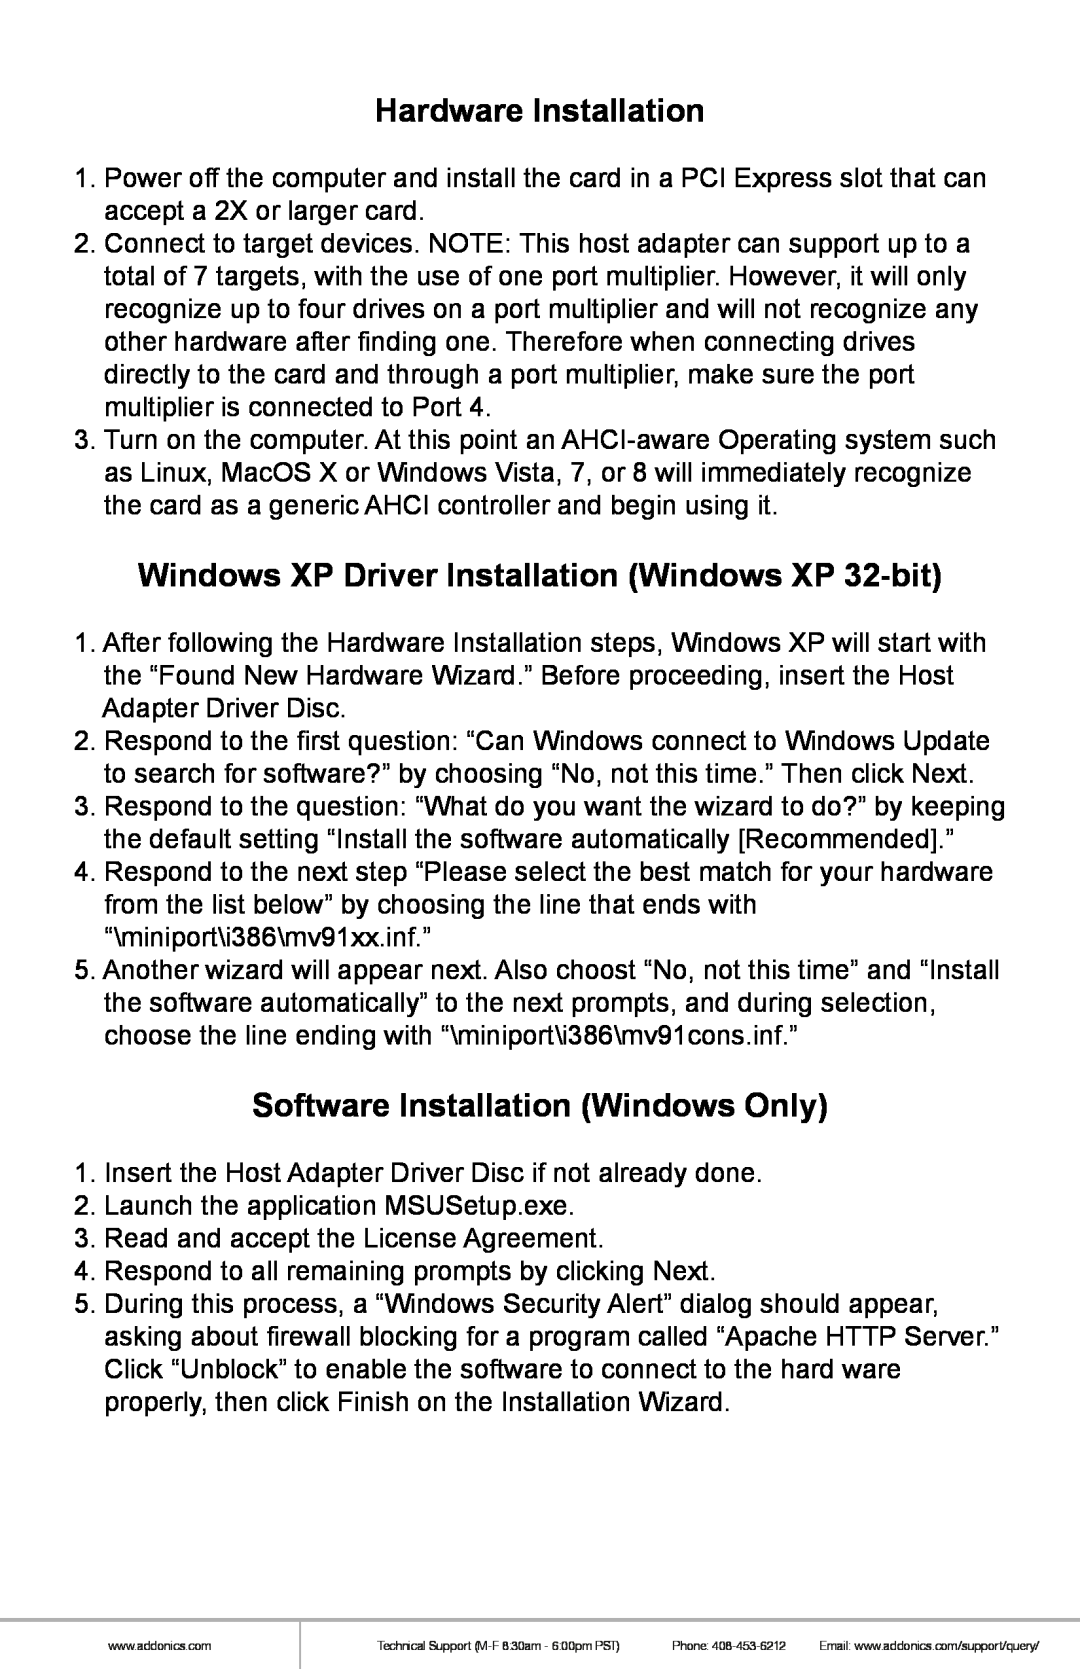 Addonics Technologies AD4SA6GPX2 manual Hardware Installation, Windows XP Driver Installation Windows XP 32-bit 